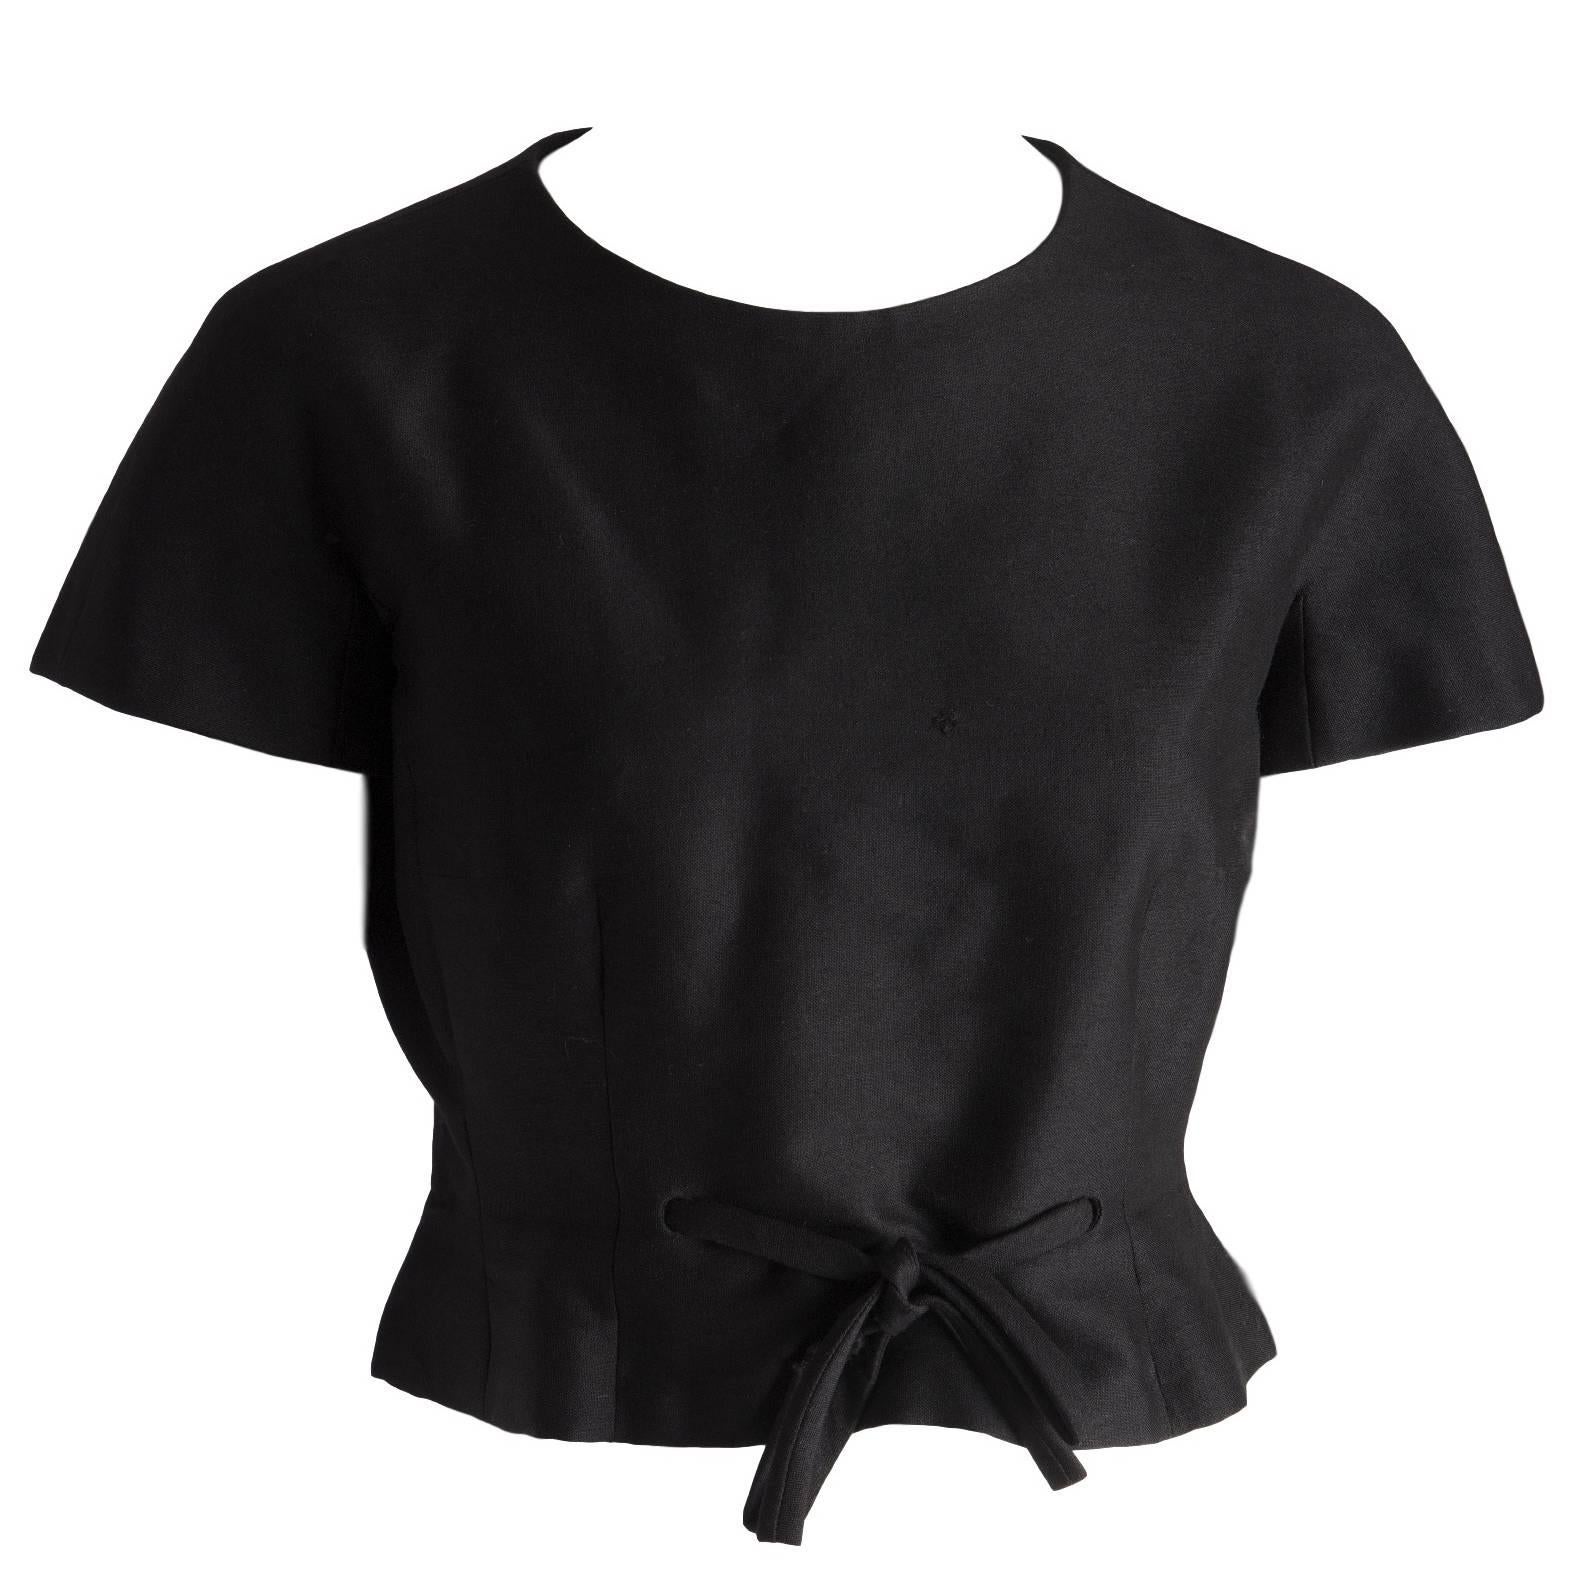 Christian Dior 1959 Black Haute Couture Yves Saint Laurent Black Wool Top 10 For Sale